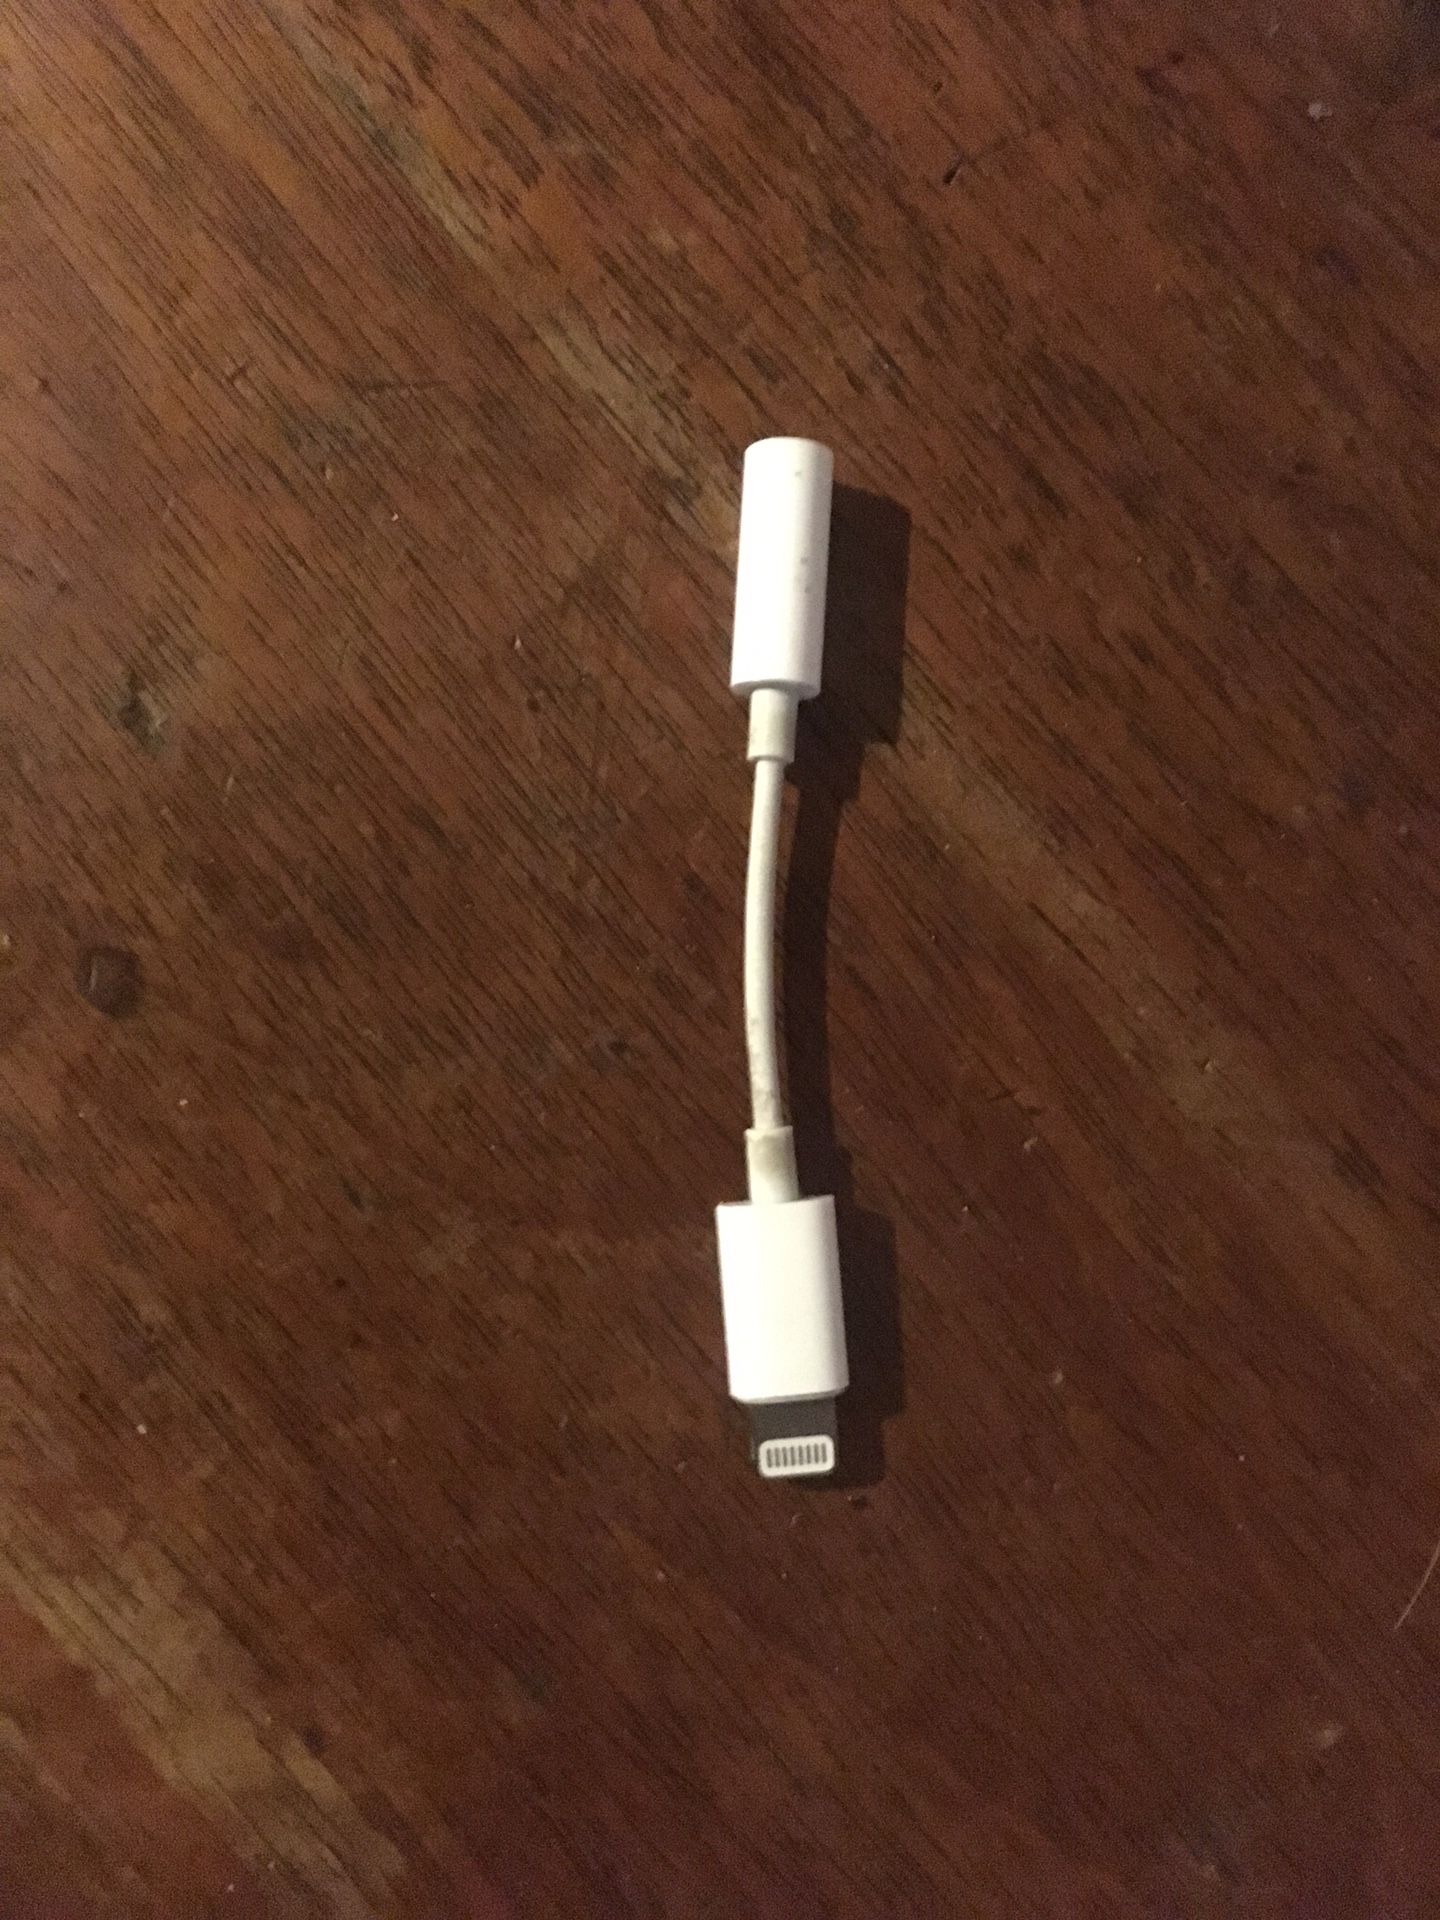 Apple Lightning to Headphone Adapter